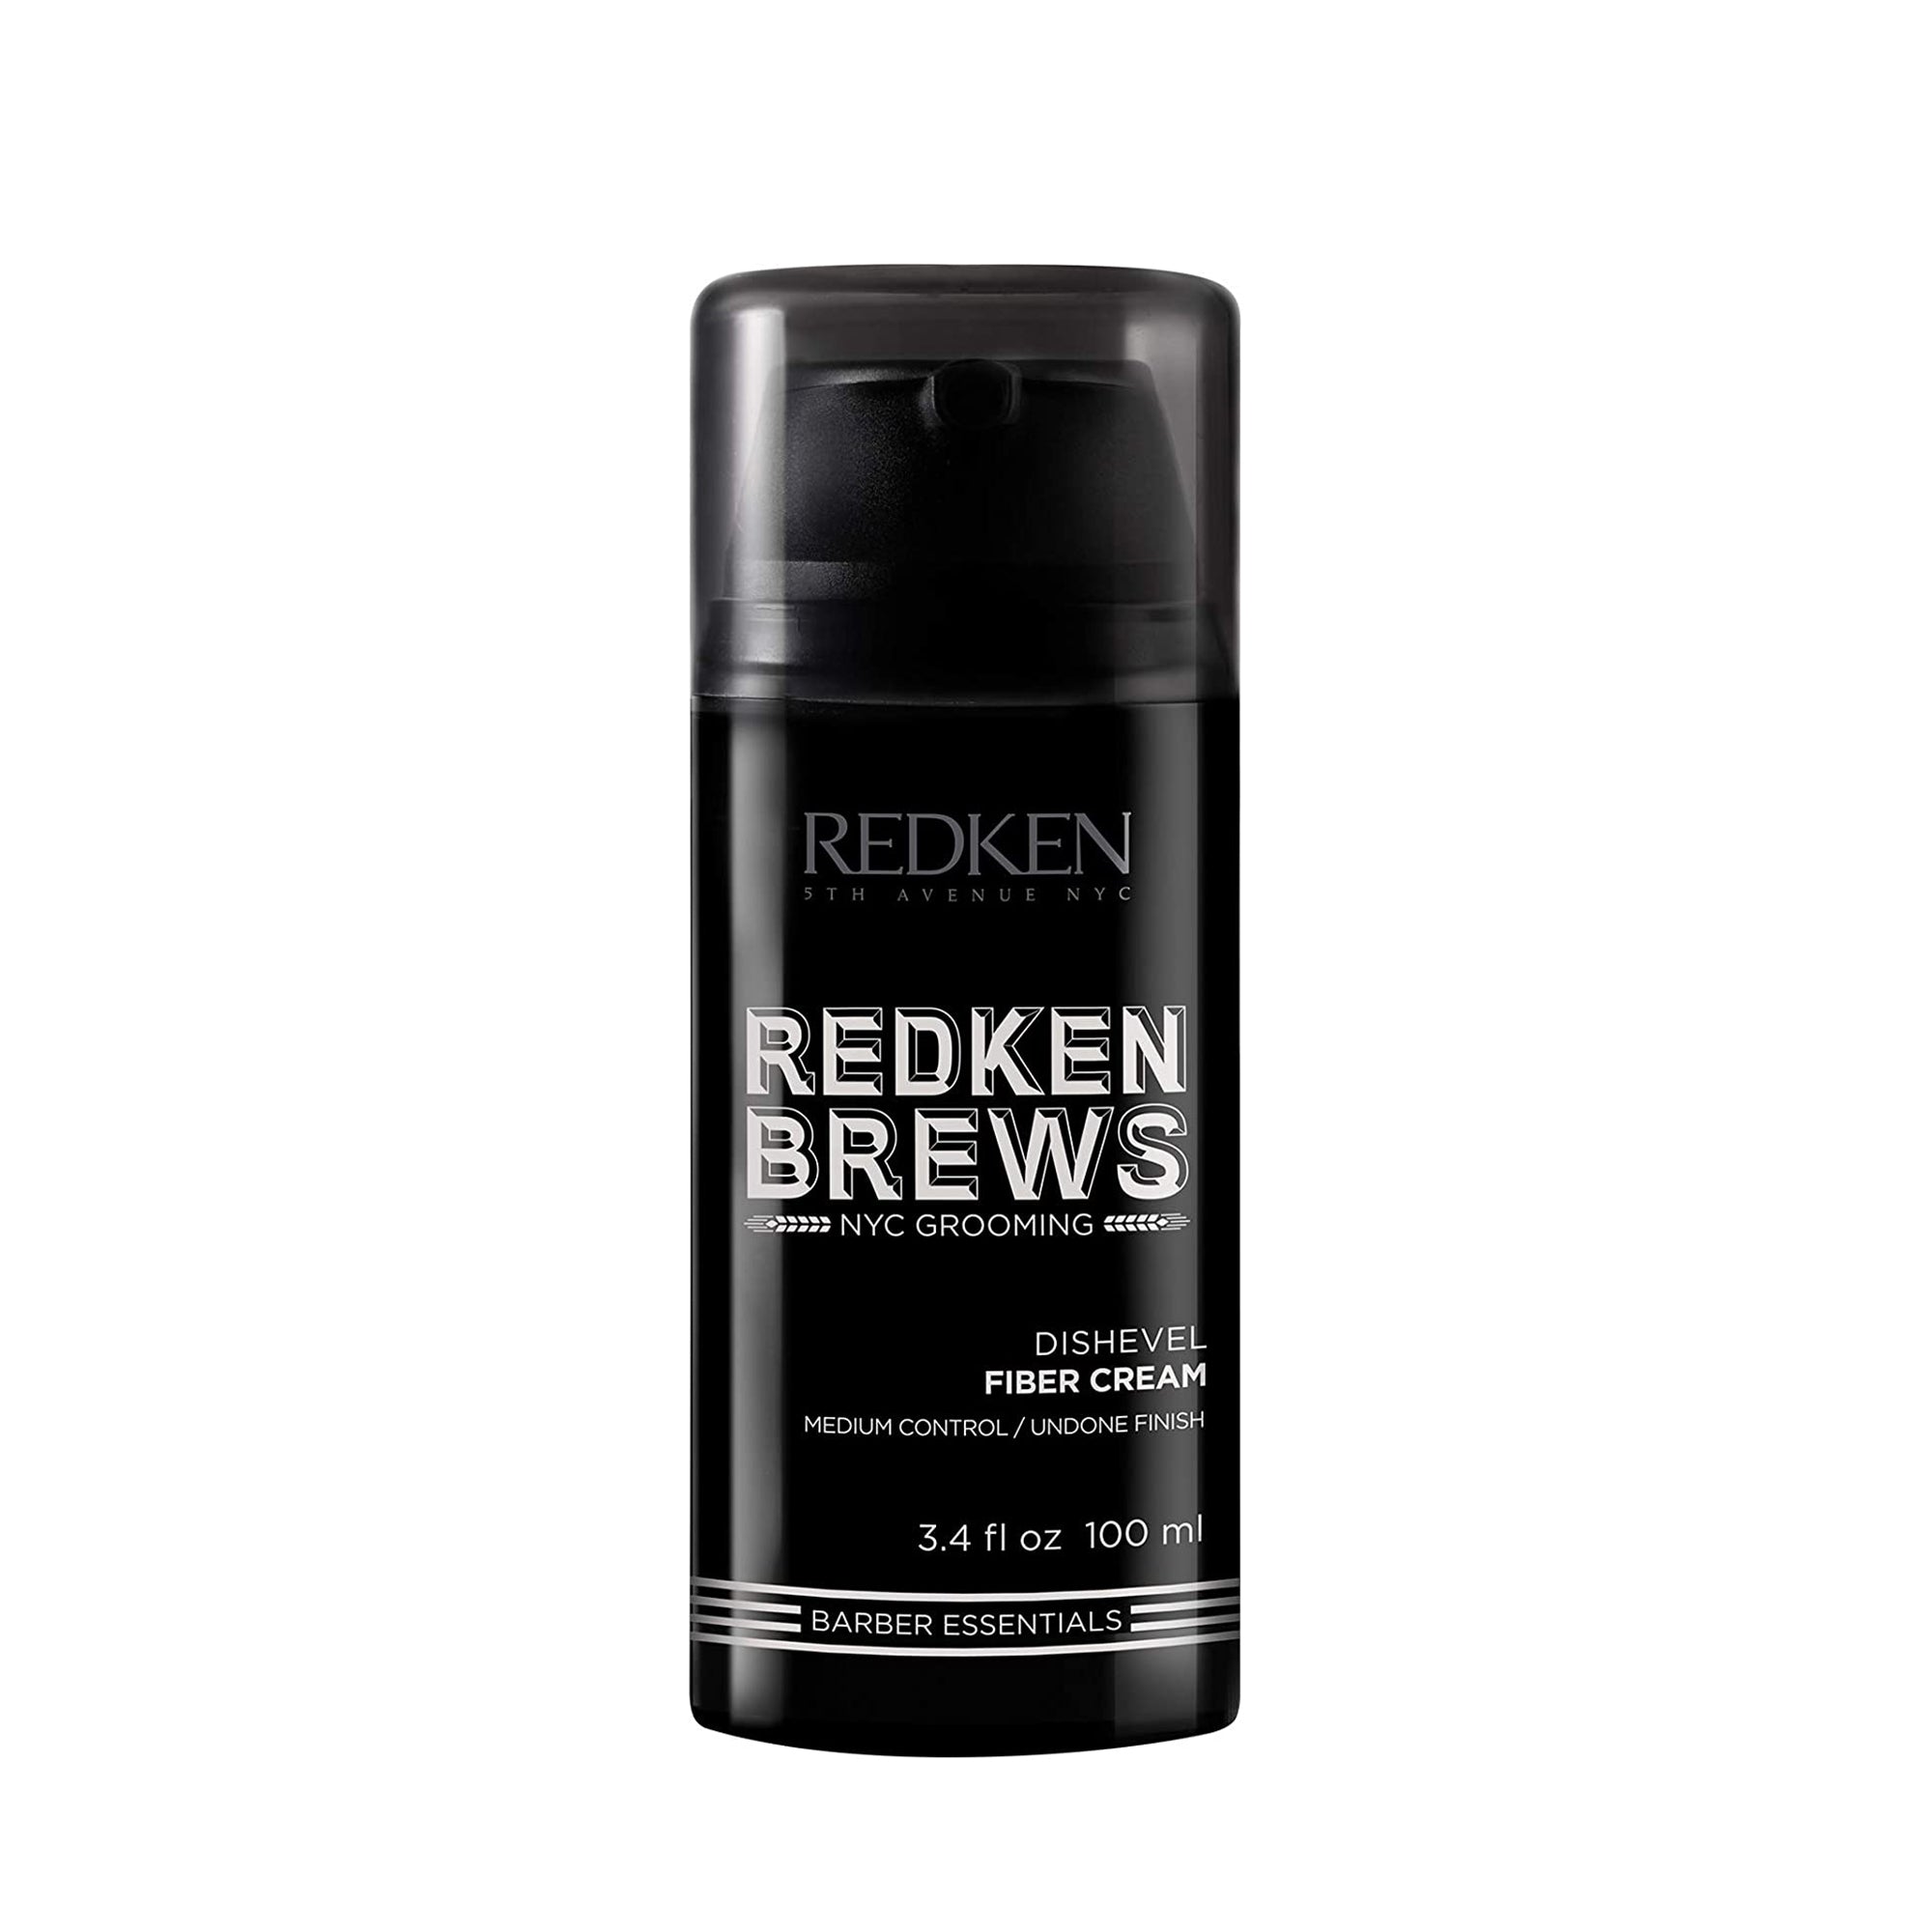 Redken Brews Dishevel Fiber Cream 3.4 oz. / 3.4OZ